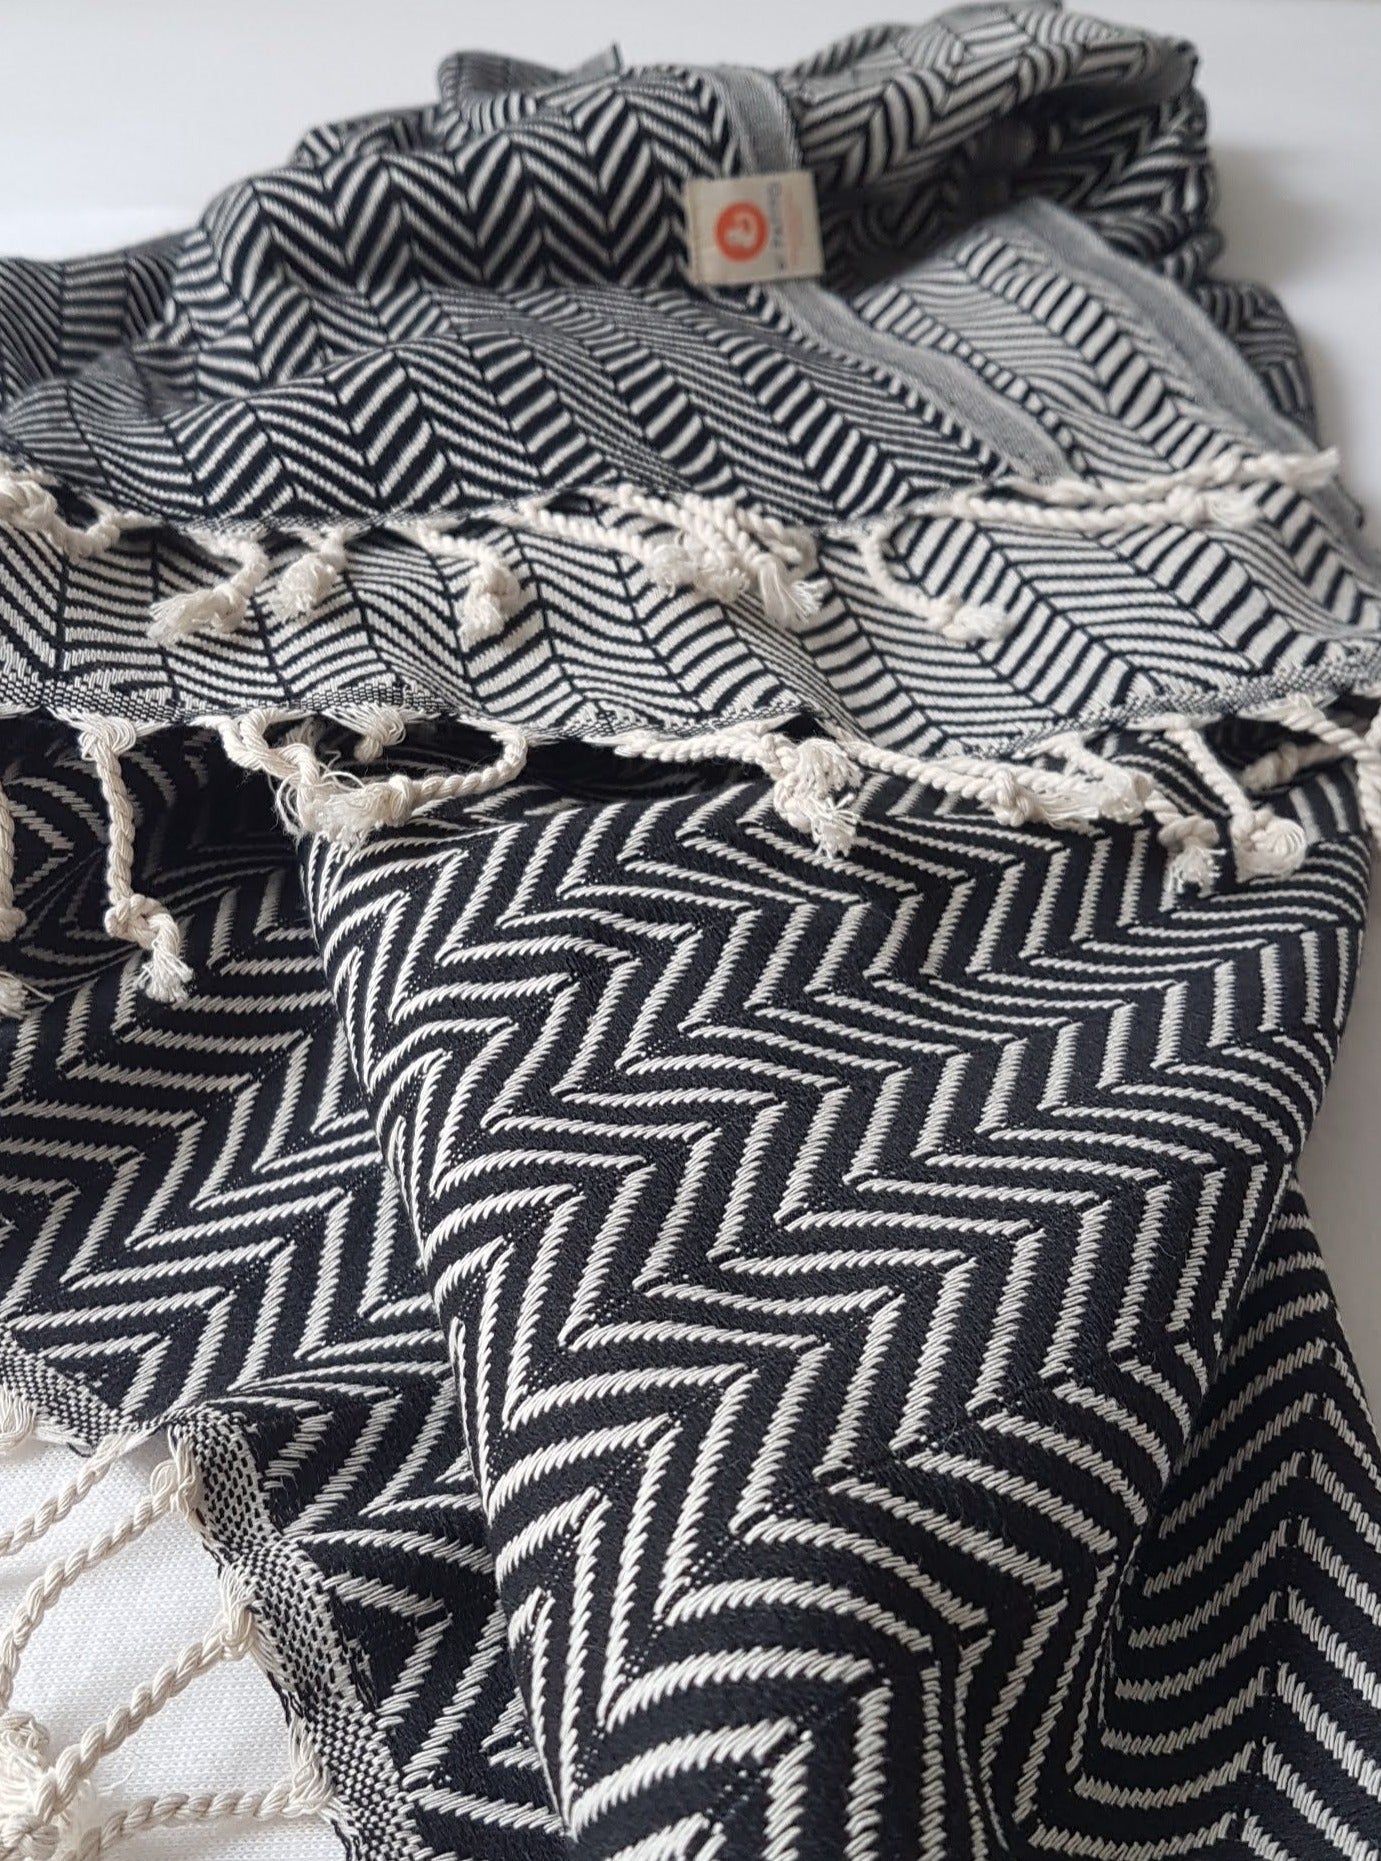 el patito towels and bathrobes turkish cotton towel 100% natural herringbone pattern blanket black